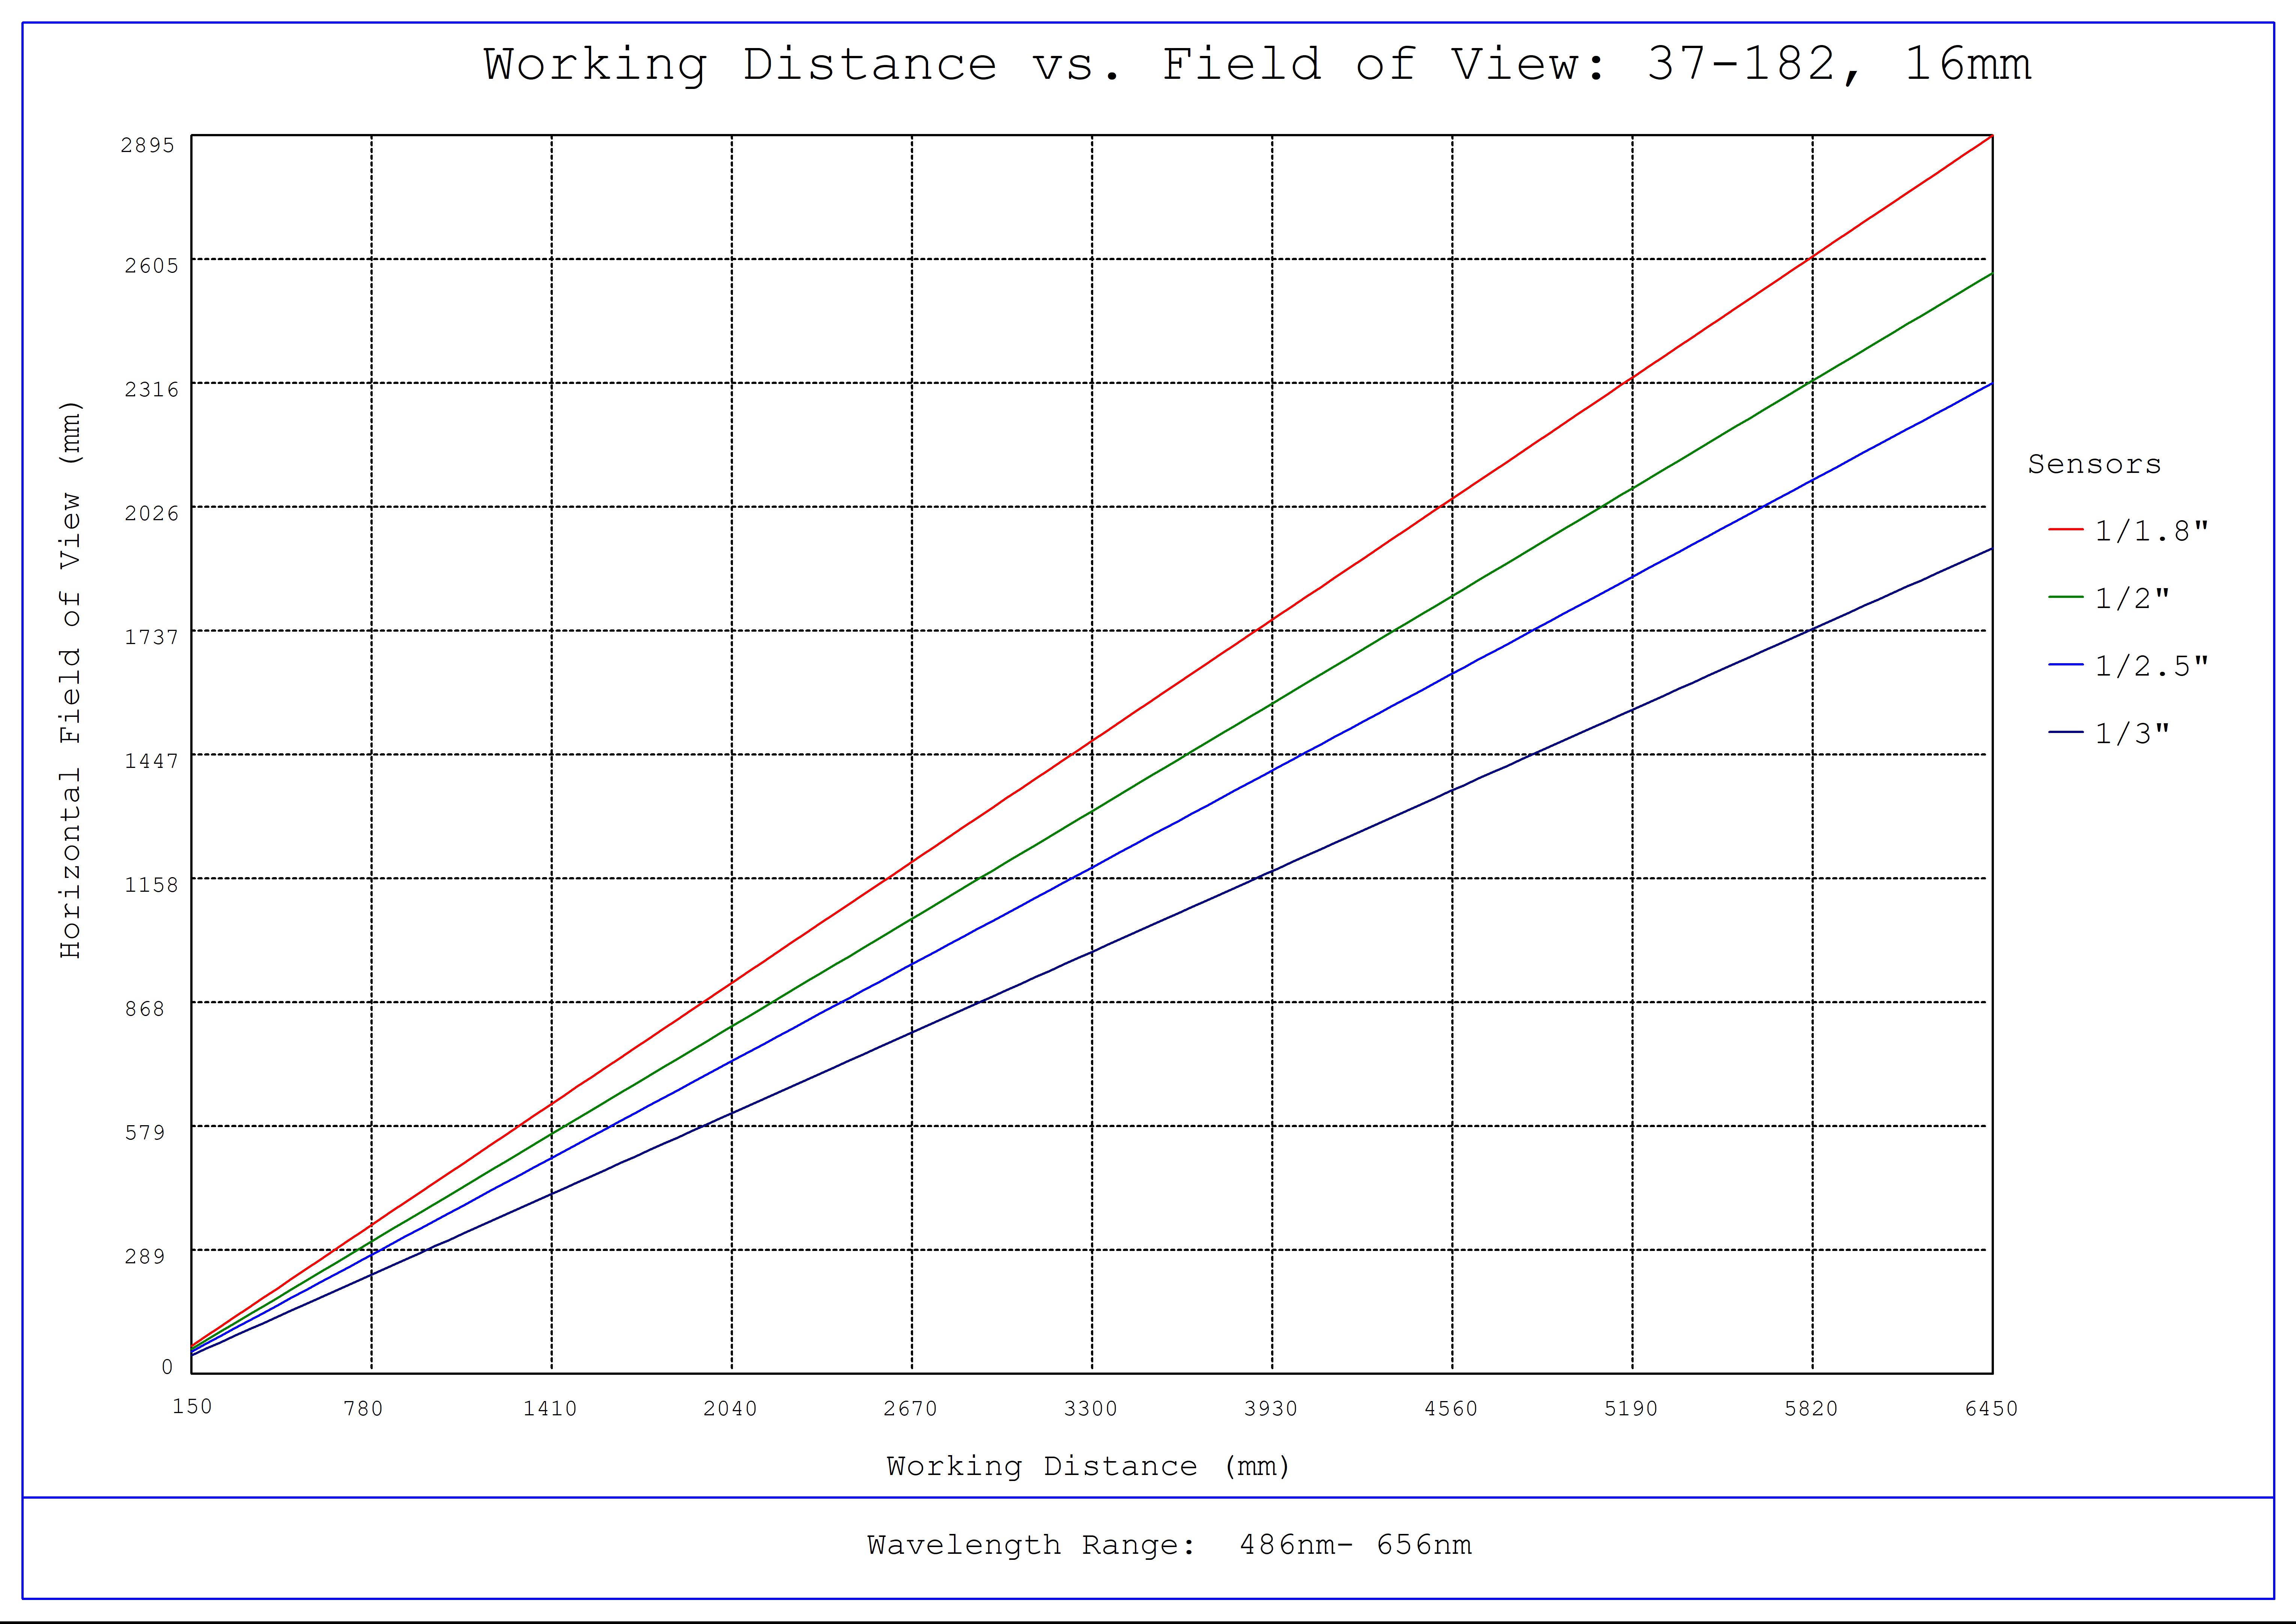 #37-182, 16mm FL f/4.0 Blue Series M12 Lens, Working Distance versus Field of View Plot